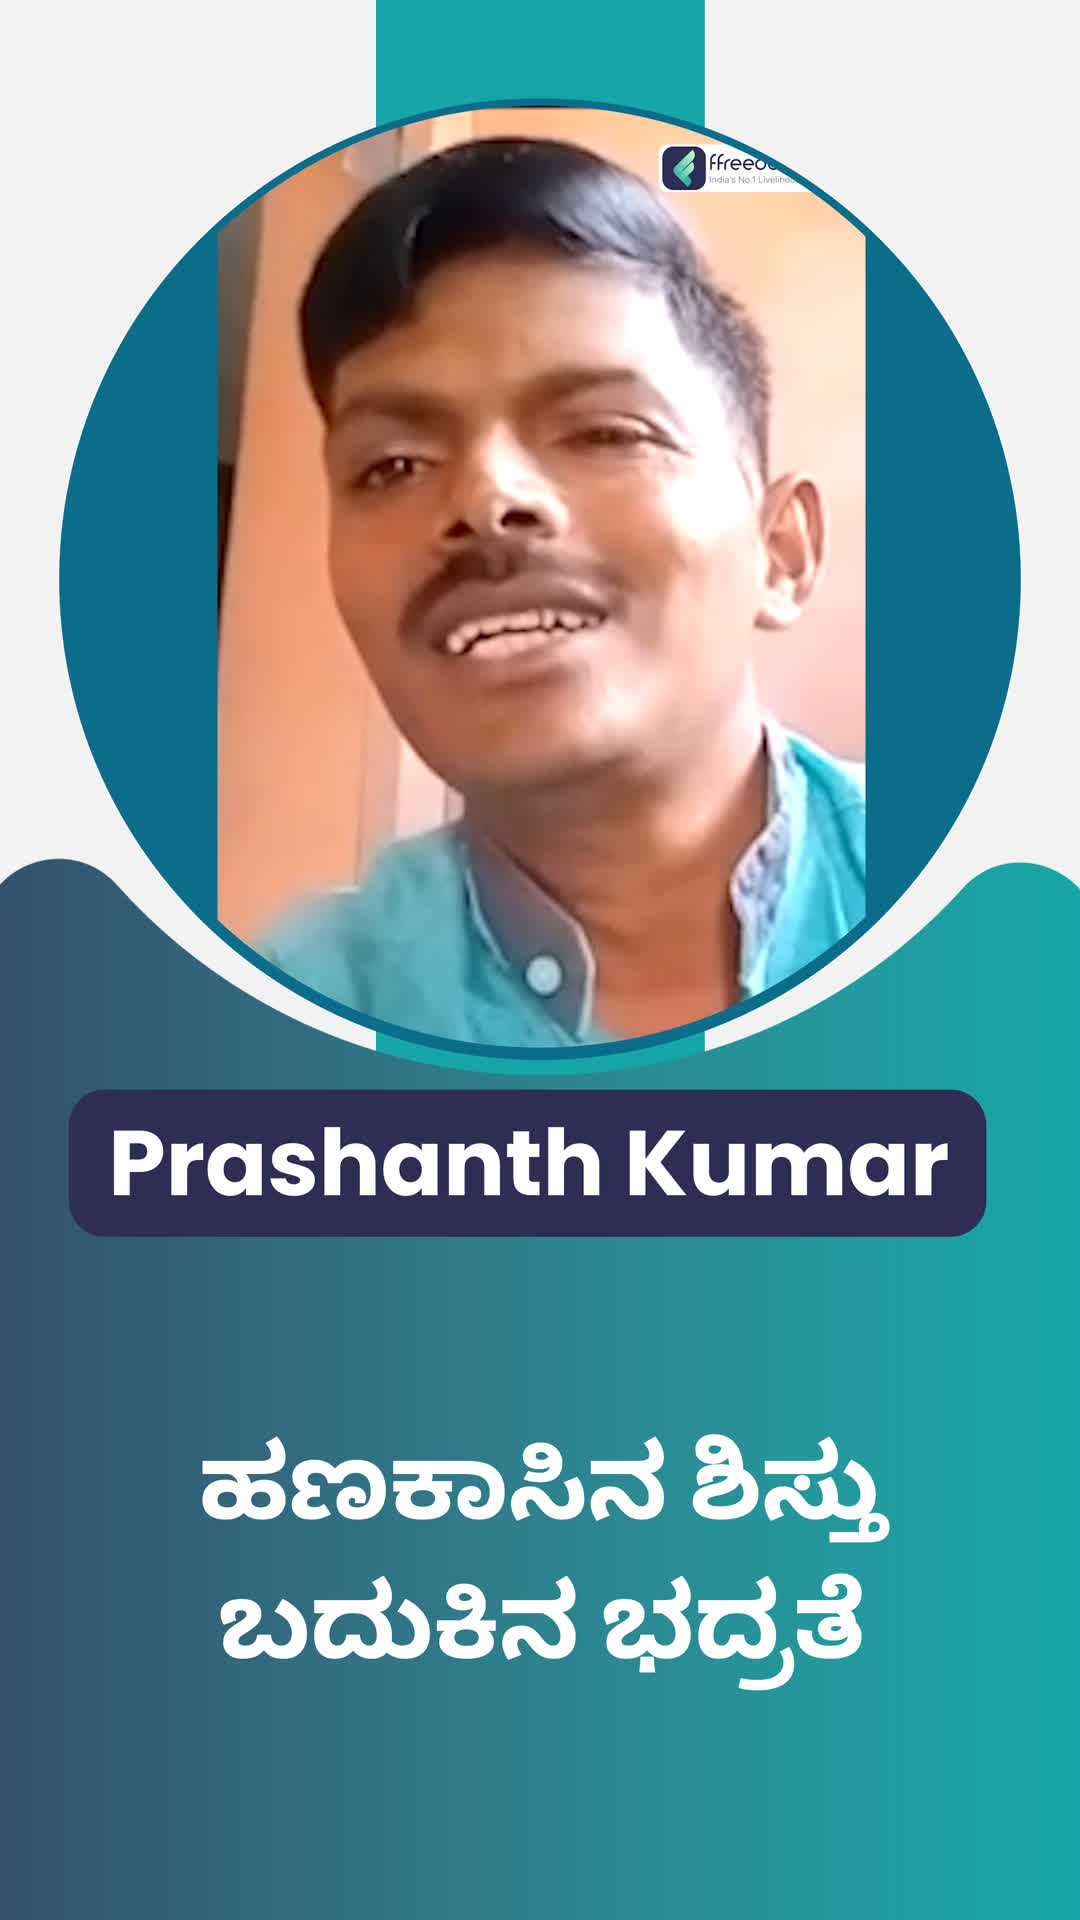 prashanth kumar s m  's Honest Review of ffreedom app - Ballari ,Karnataka